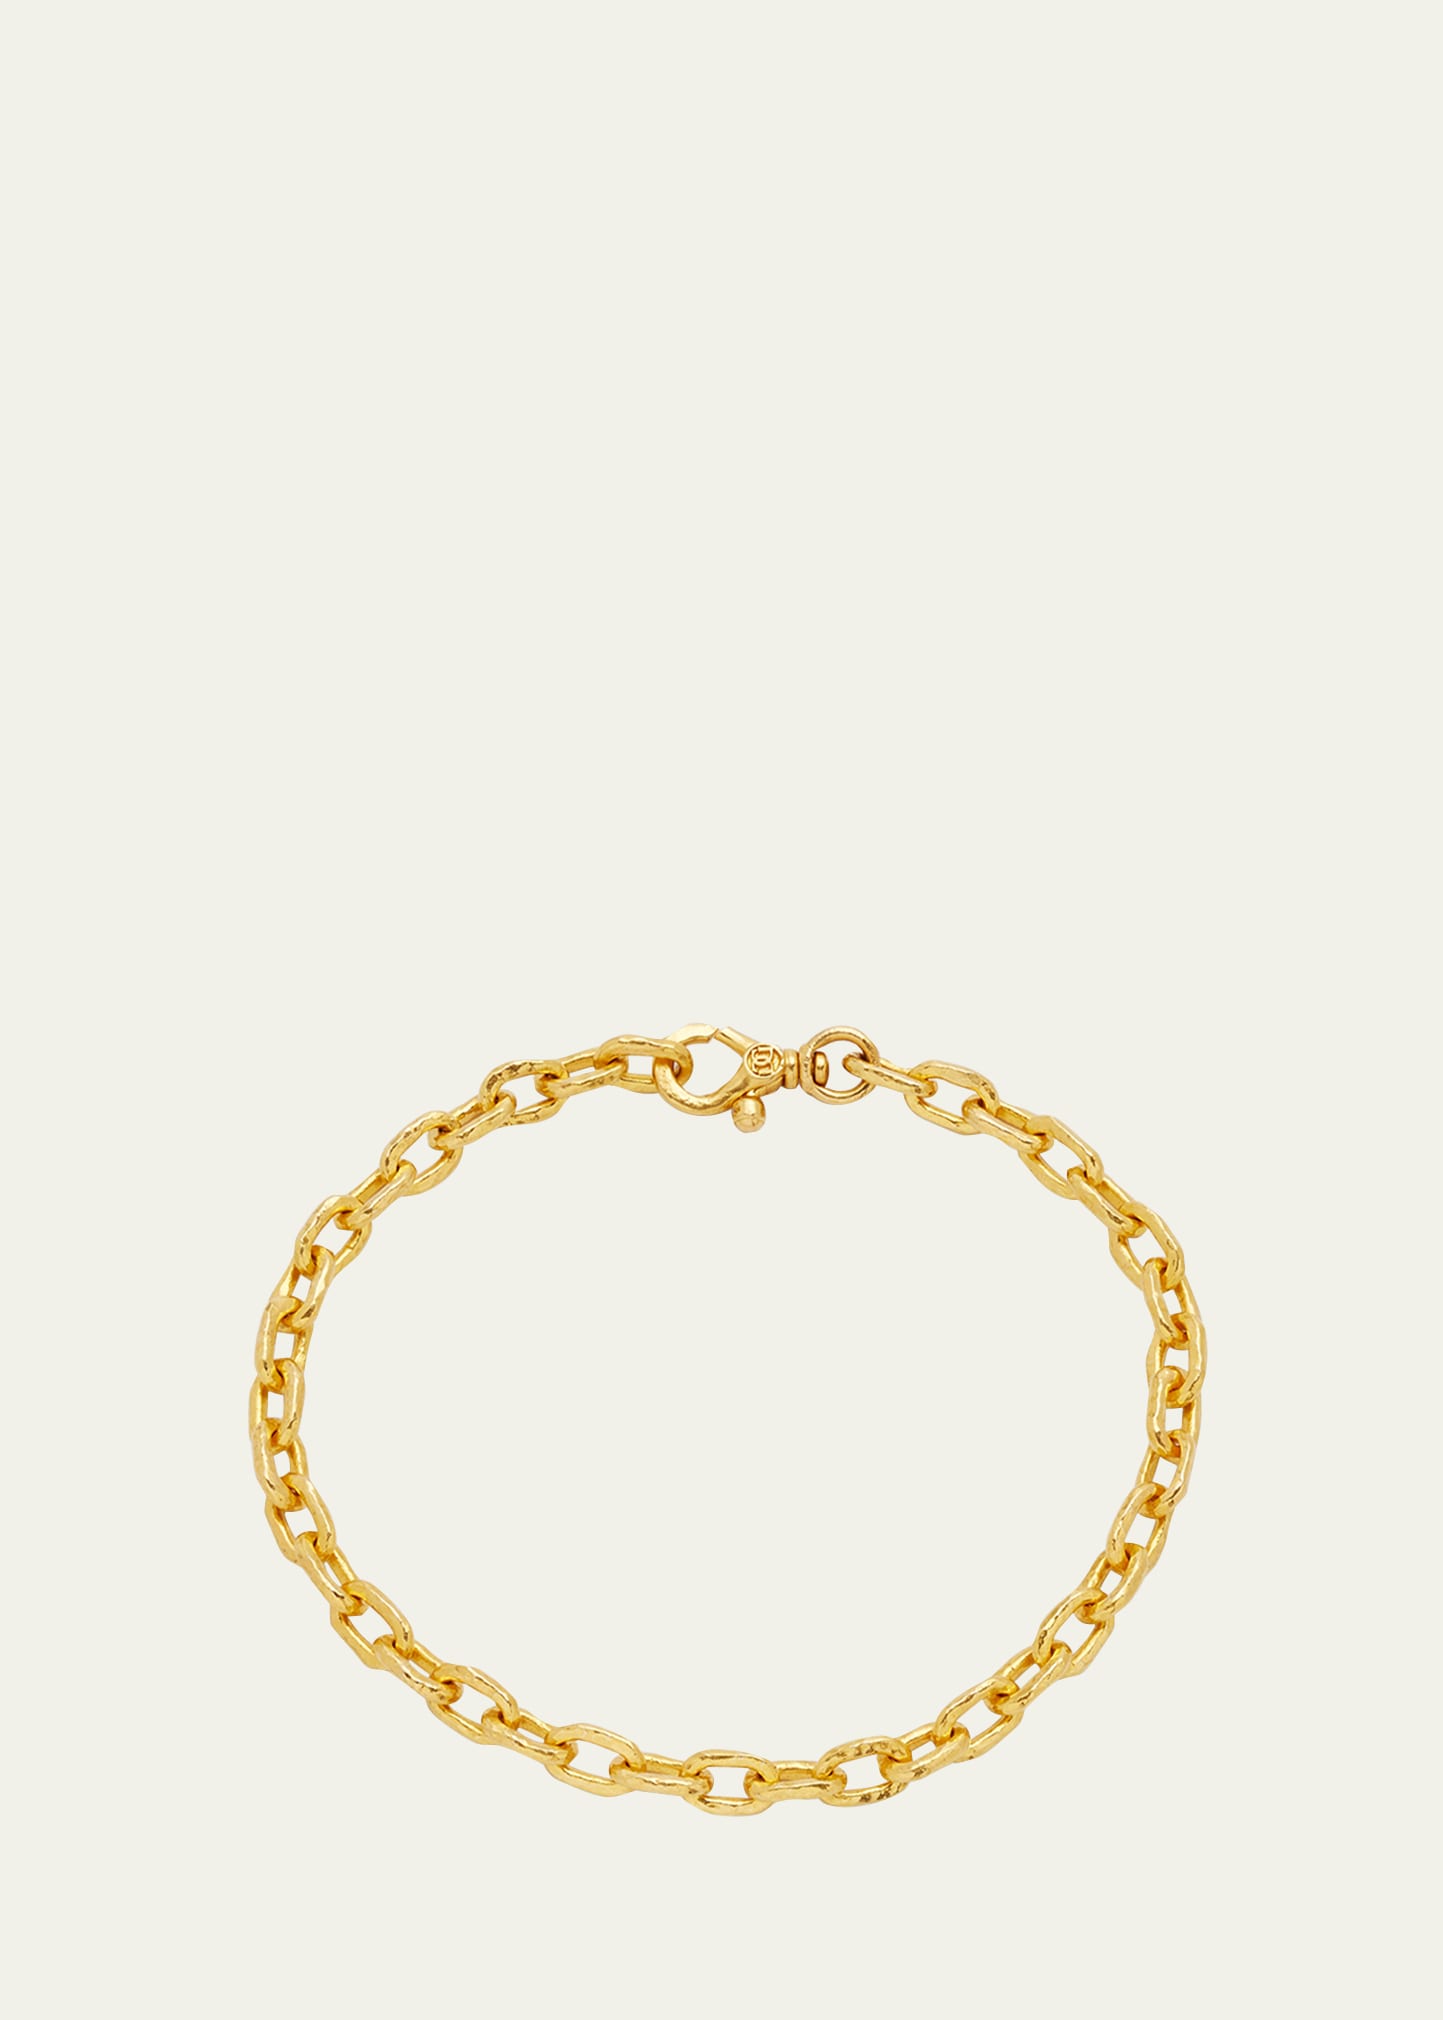 Men's 24K Yellow Gold Chain Bracelet